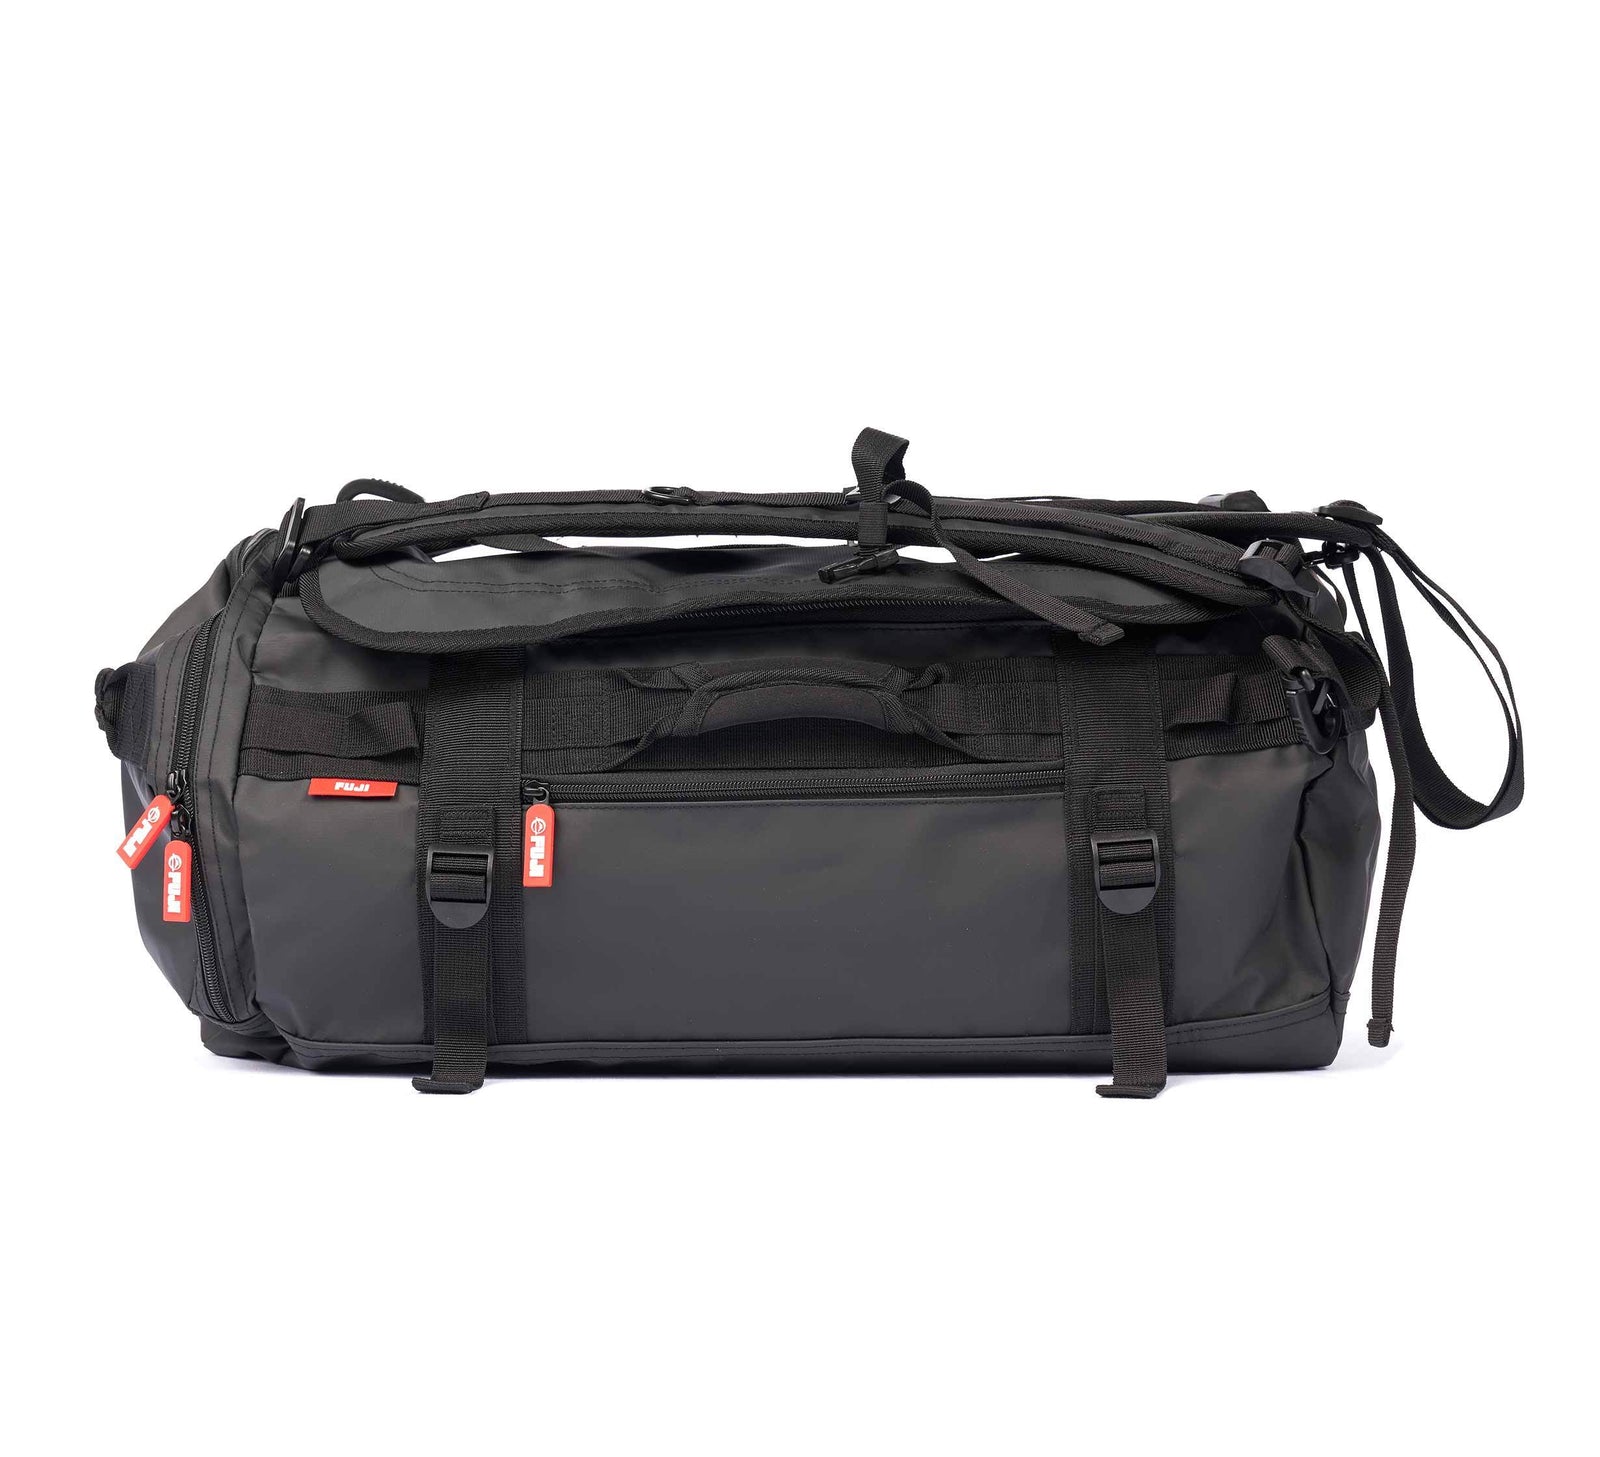 Blank Duffle Bag Duffel Bag Travel Size Sports Durable Gym Purple